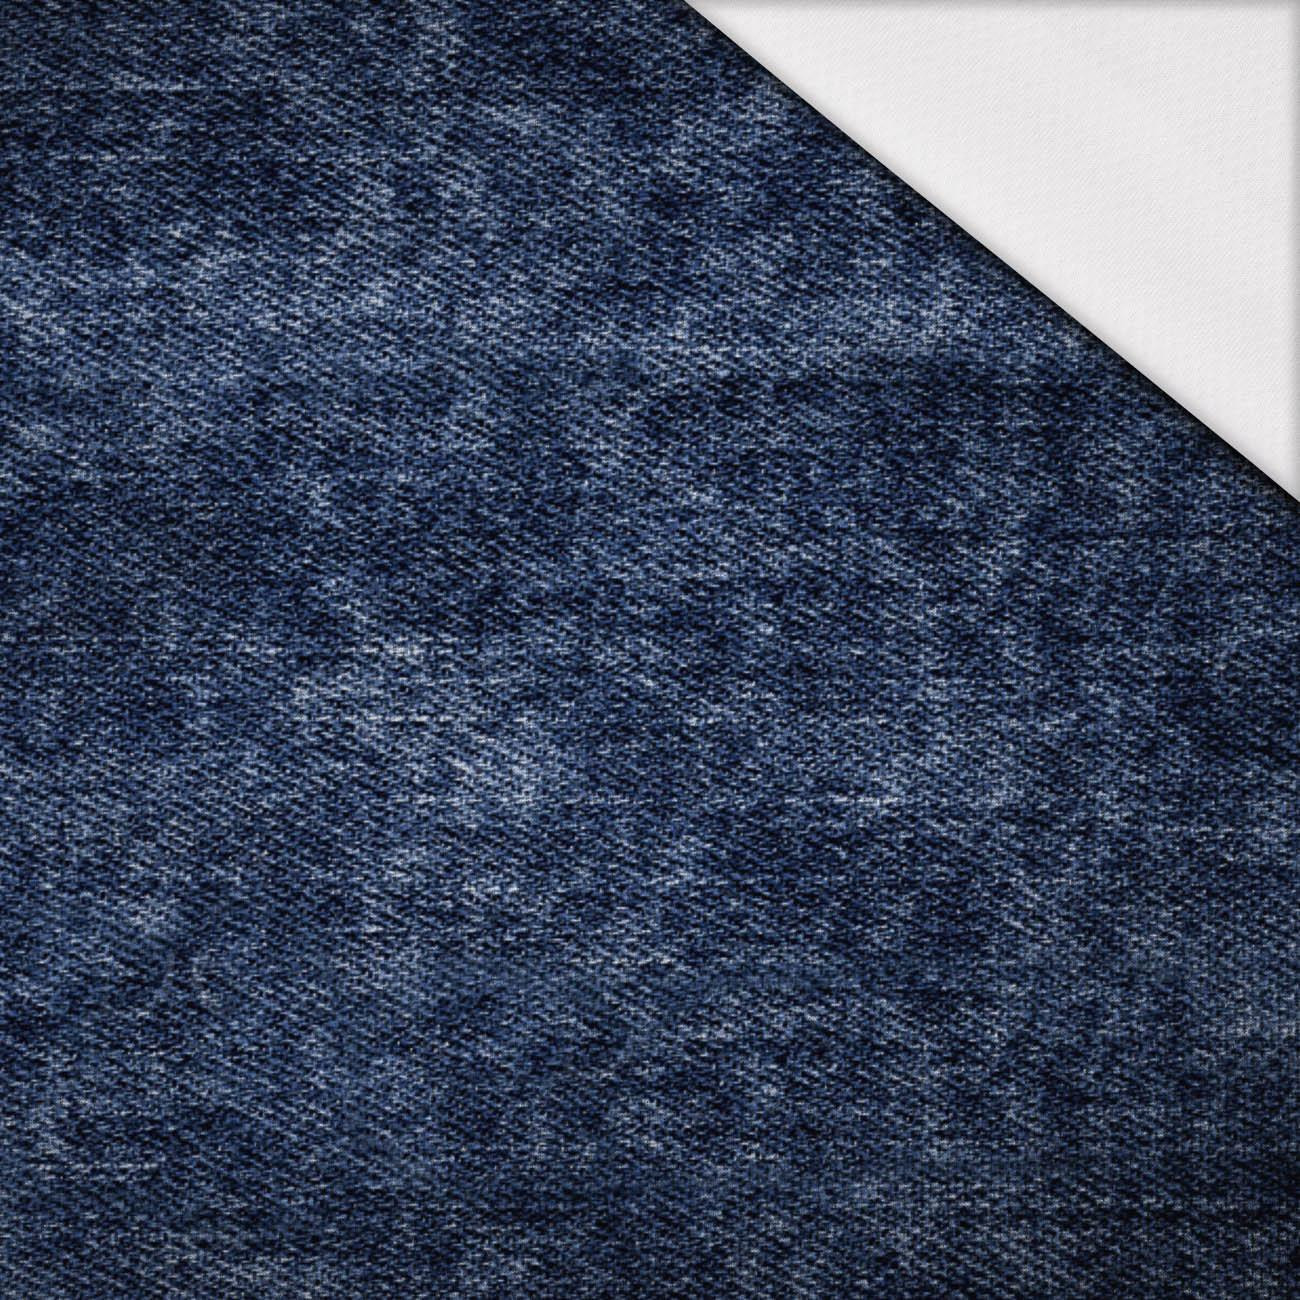 VINTAGE LOOK JEANS (dark blue) - Sports knit - bird eye mesh